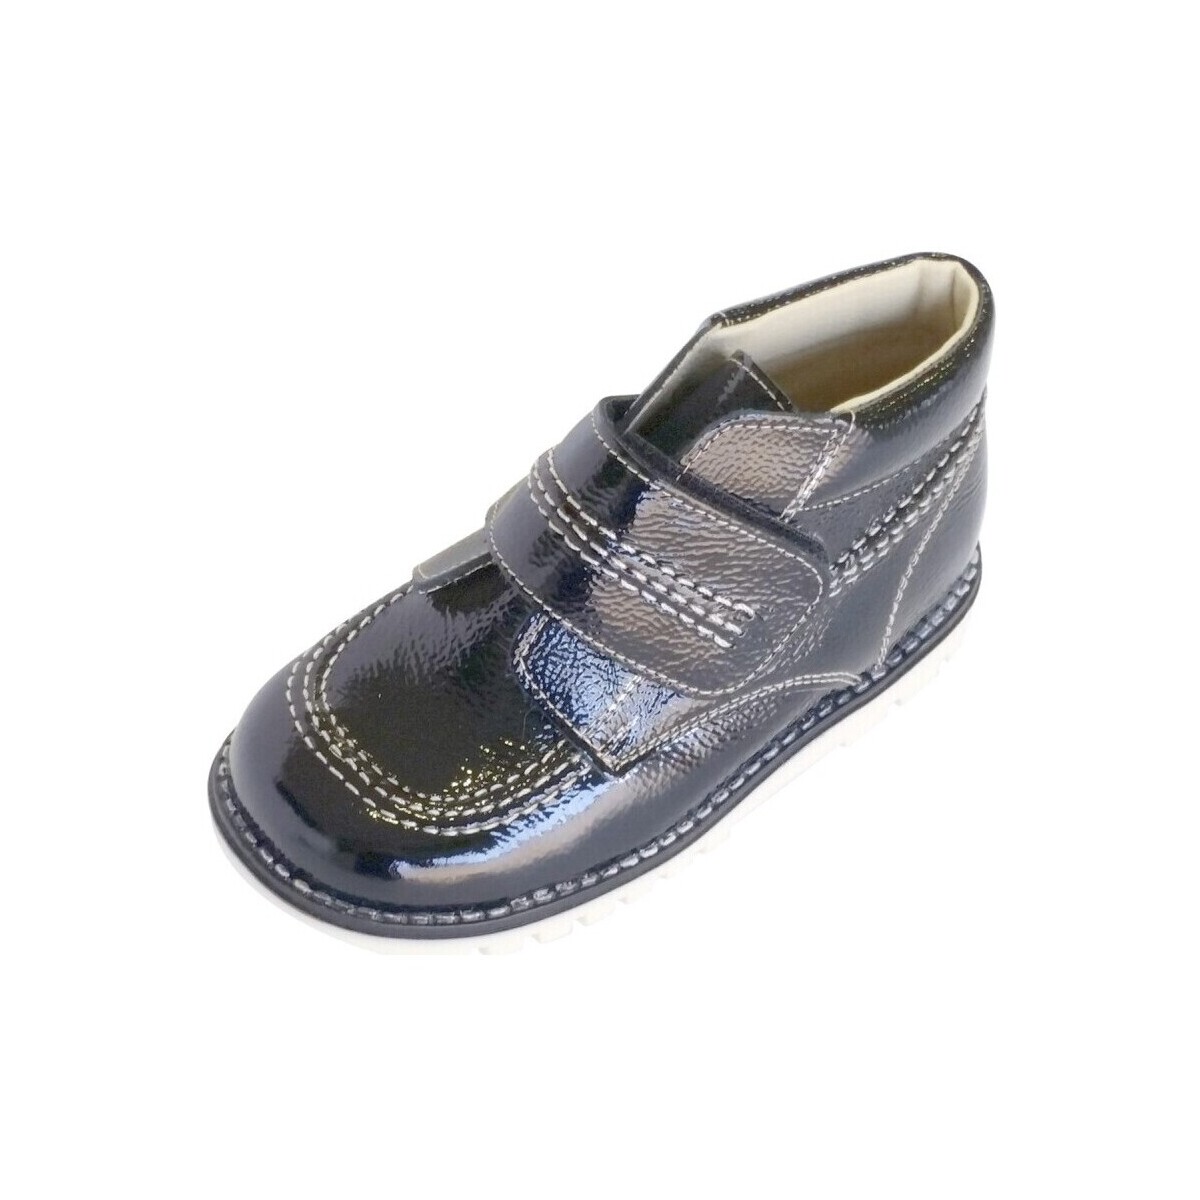 Schuhe Stiefel Bambineli 25712-18 Marine